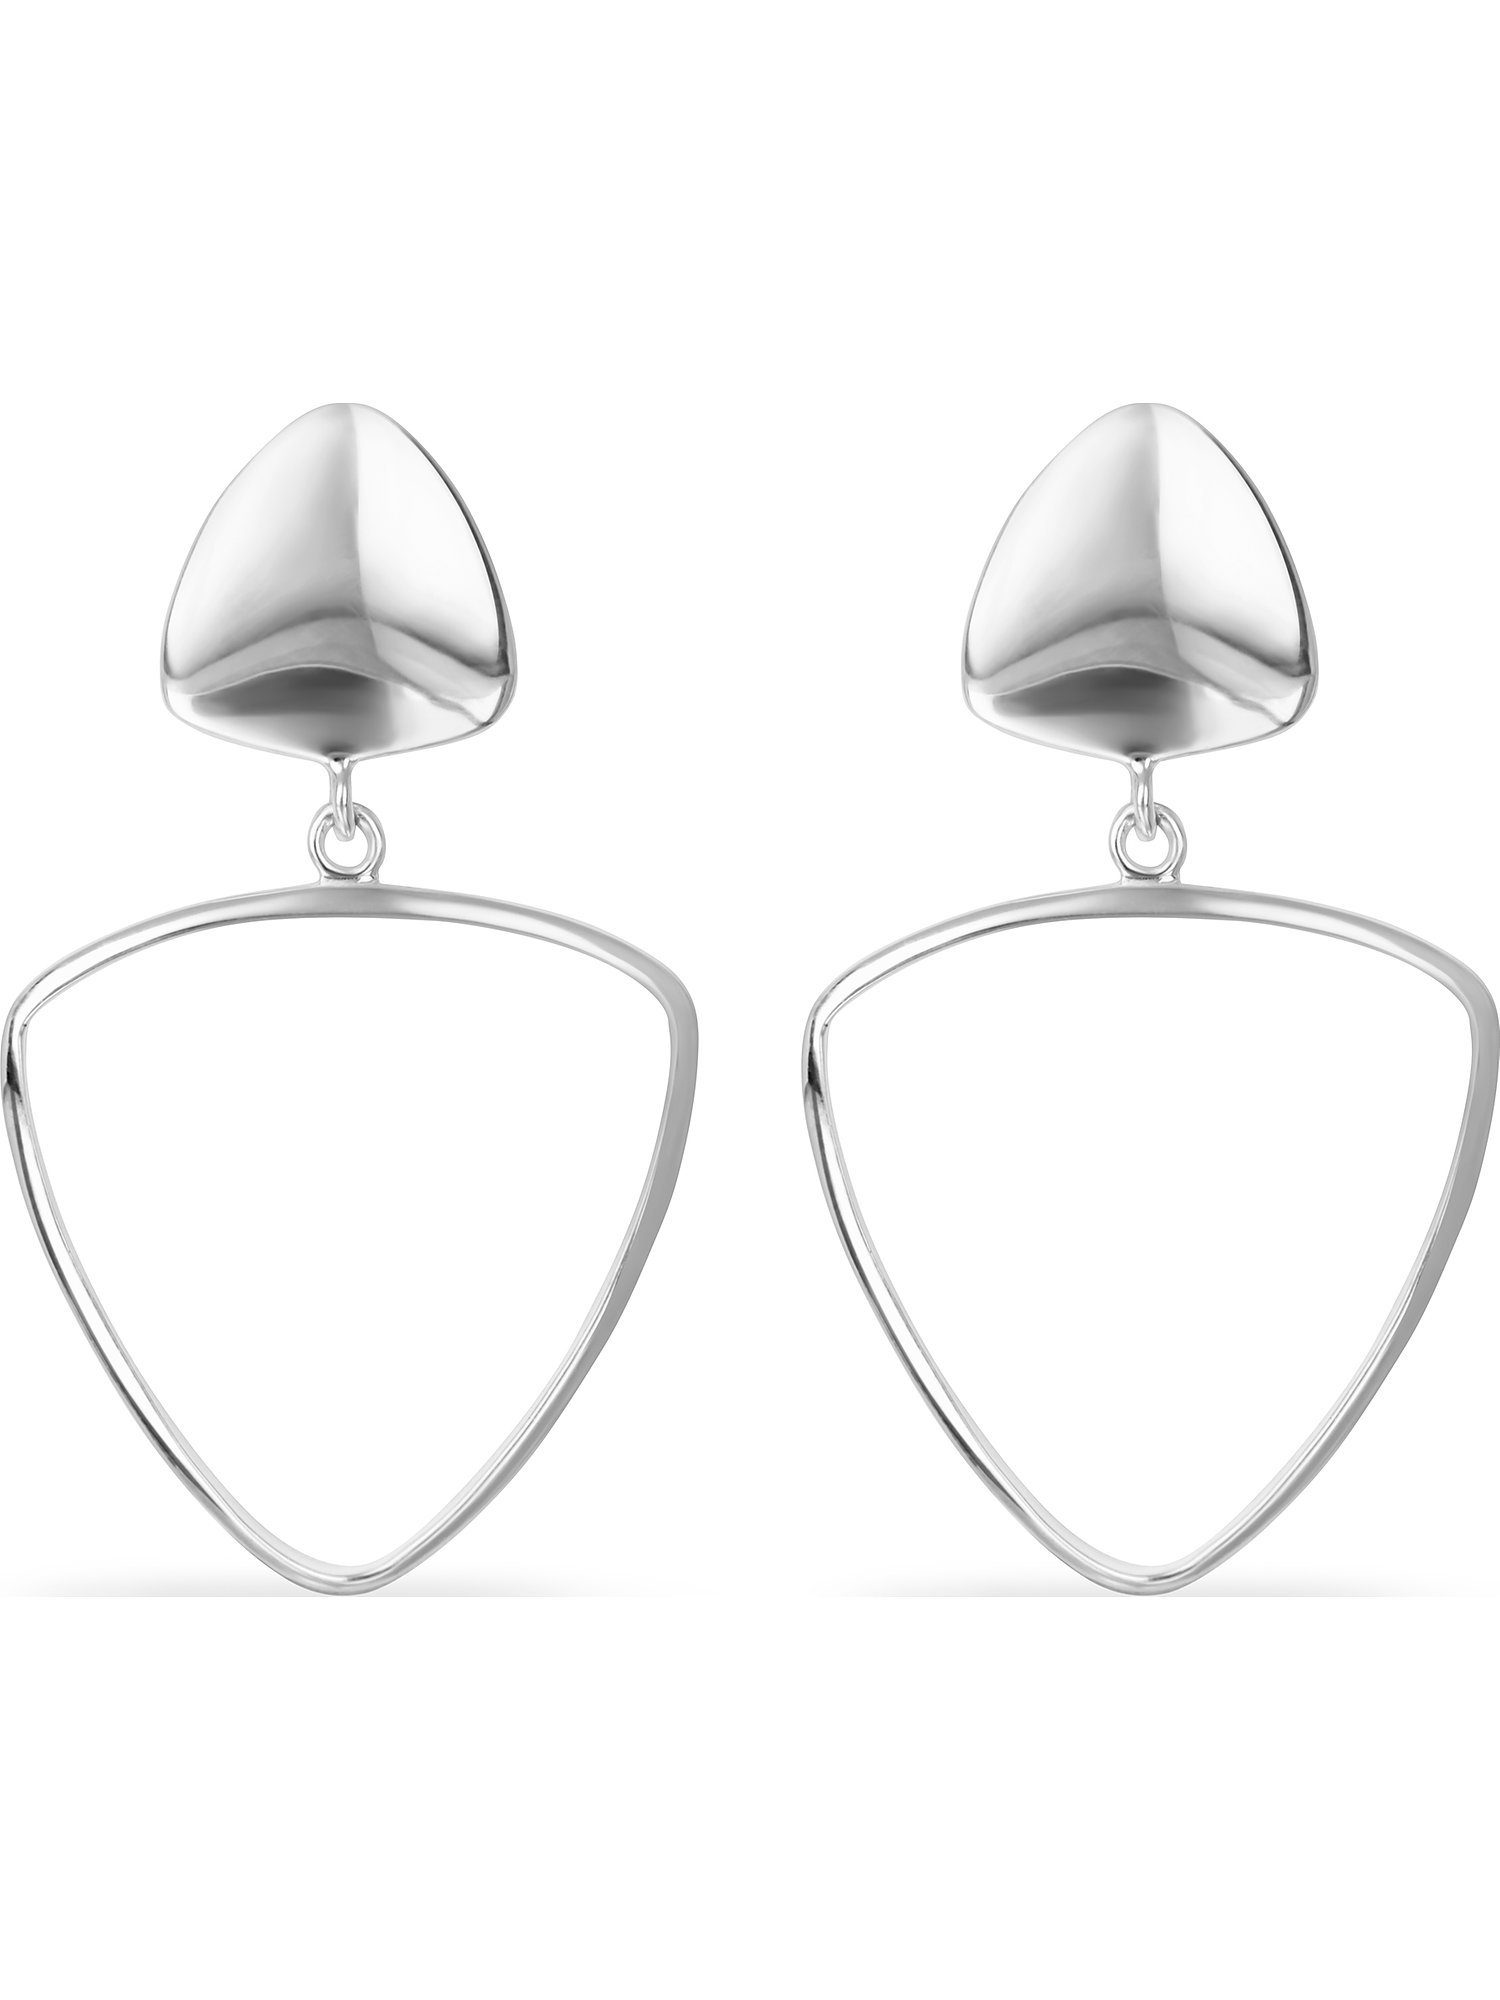 Ohrhänger Paar Silber Damen-Ohrhänger FAVS FAVS 925er